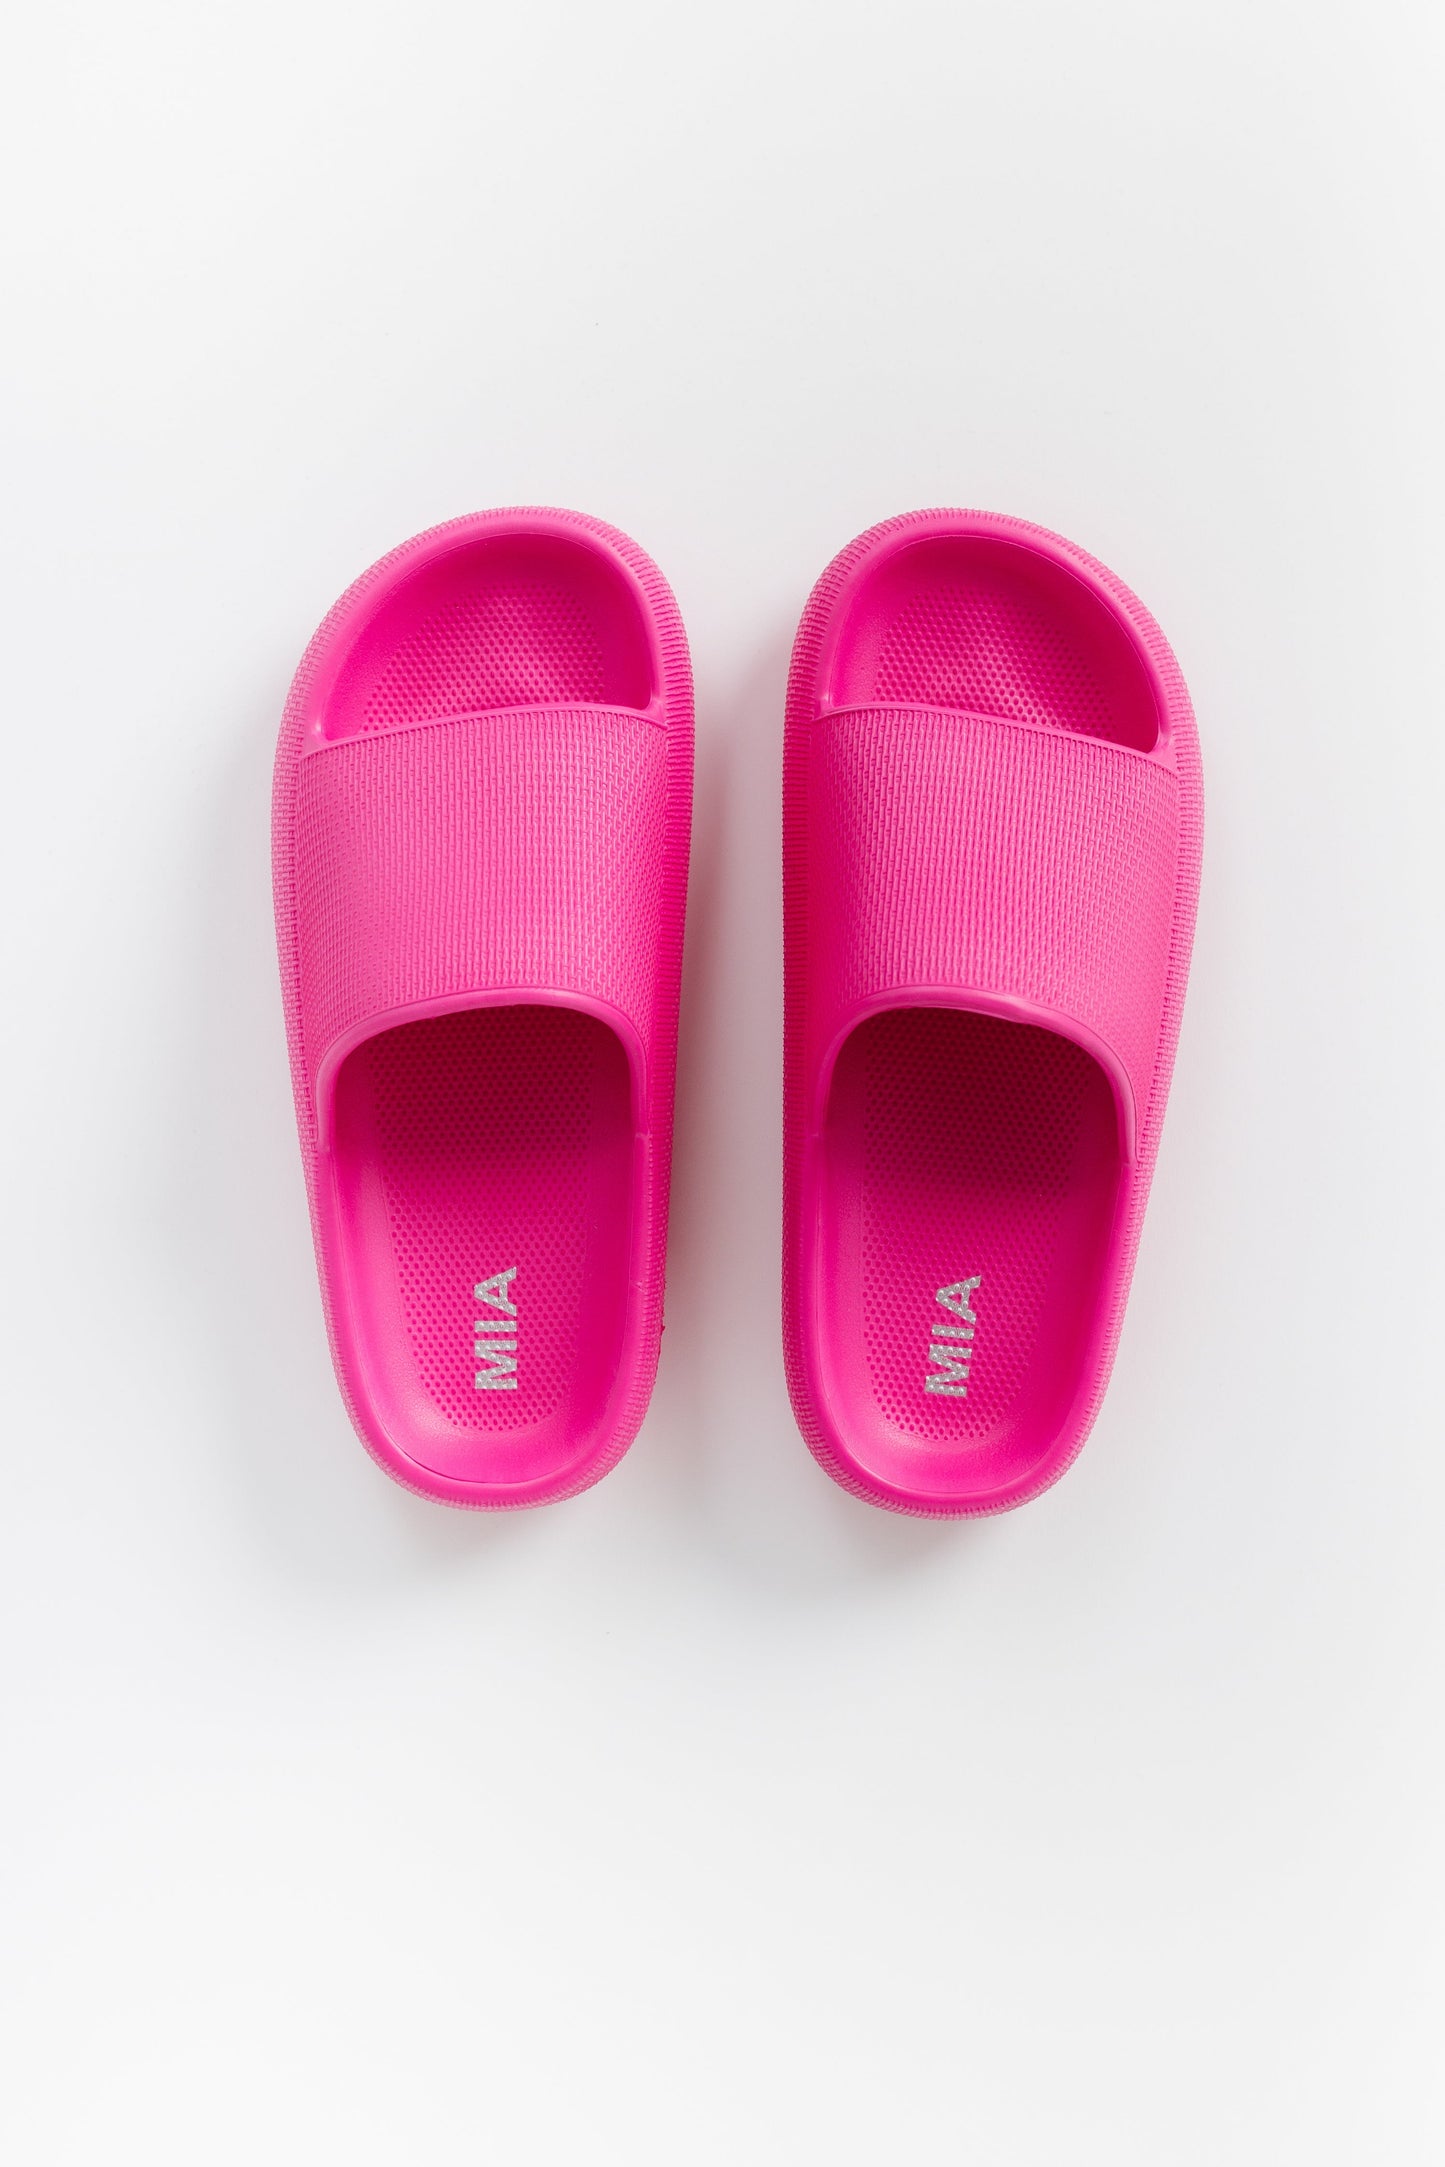 Lexa Sandals - Pink WOMEN'S SANDAL Mia PINK 10 